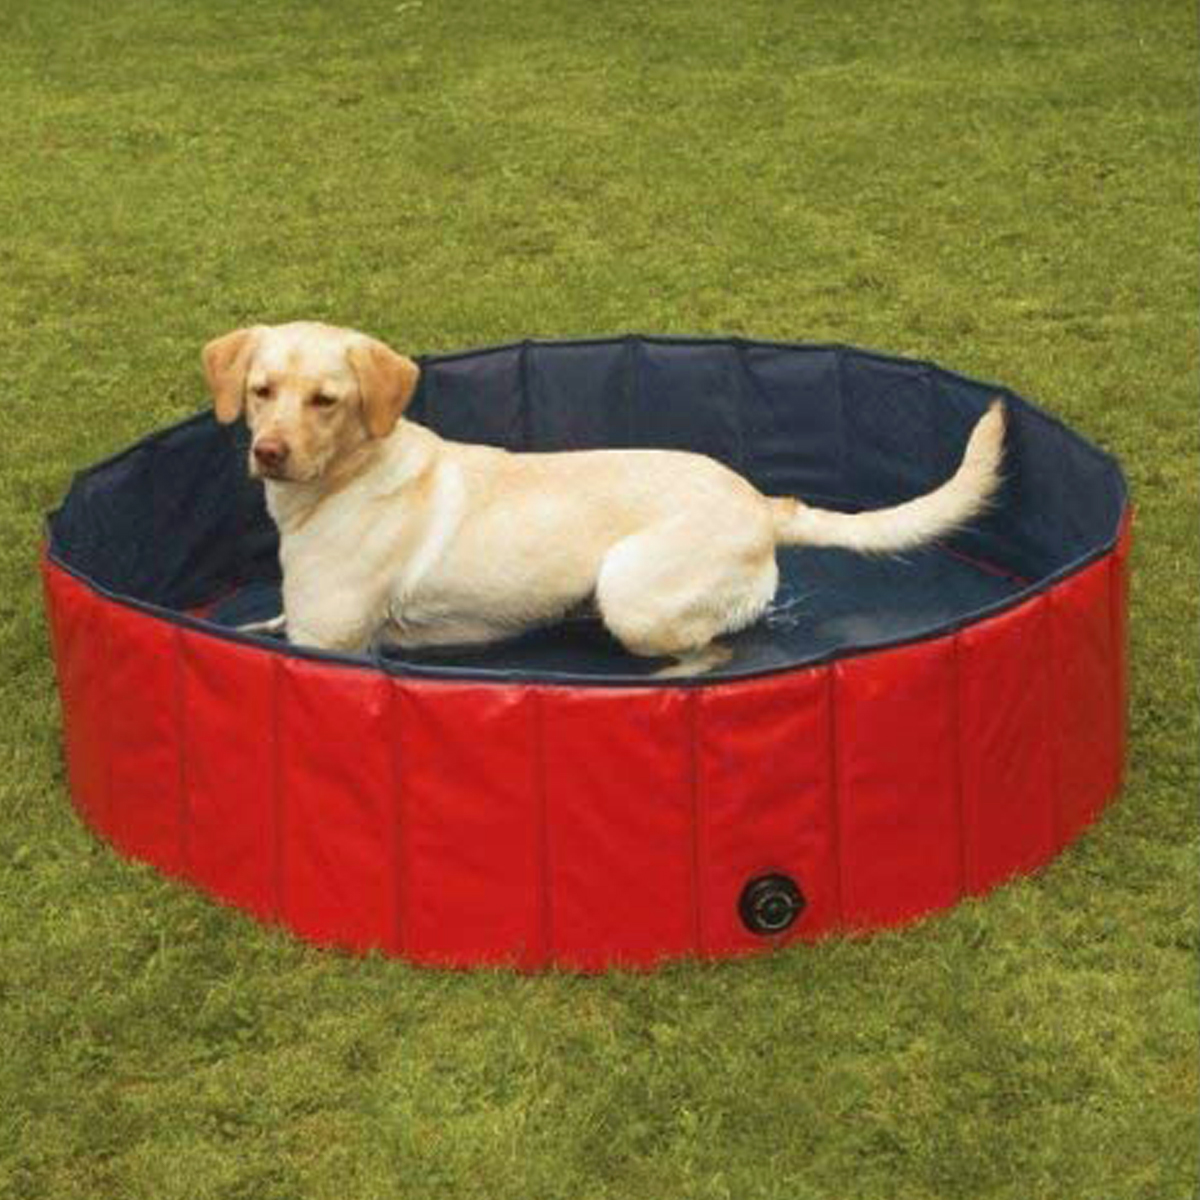 160cm-Foldable-Pet-Bath-Swimming-Pool-Collapsible-Dog-Pool-Pet-Bathing-Tub-Pool-Kiddie-Pool-for-Dogs-1925754-10